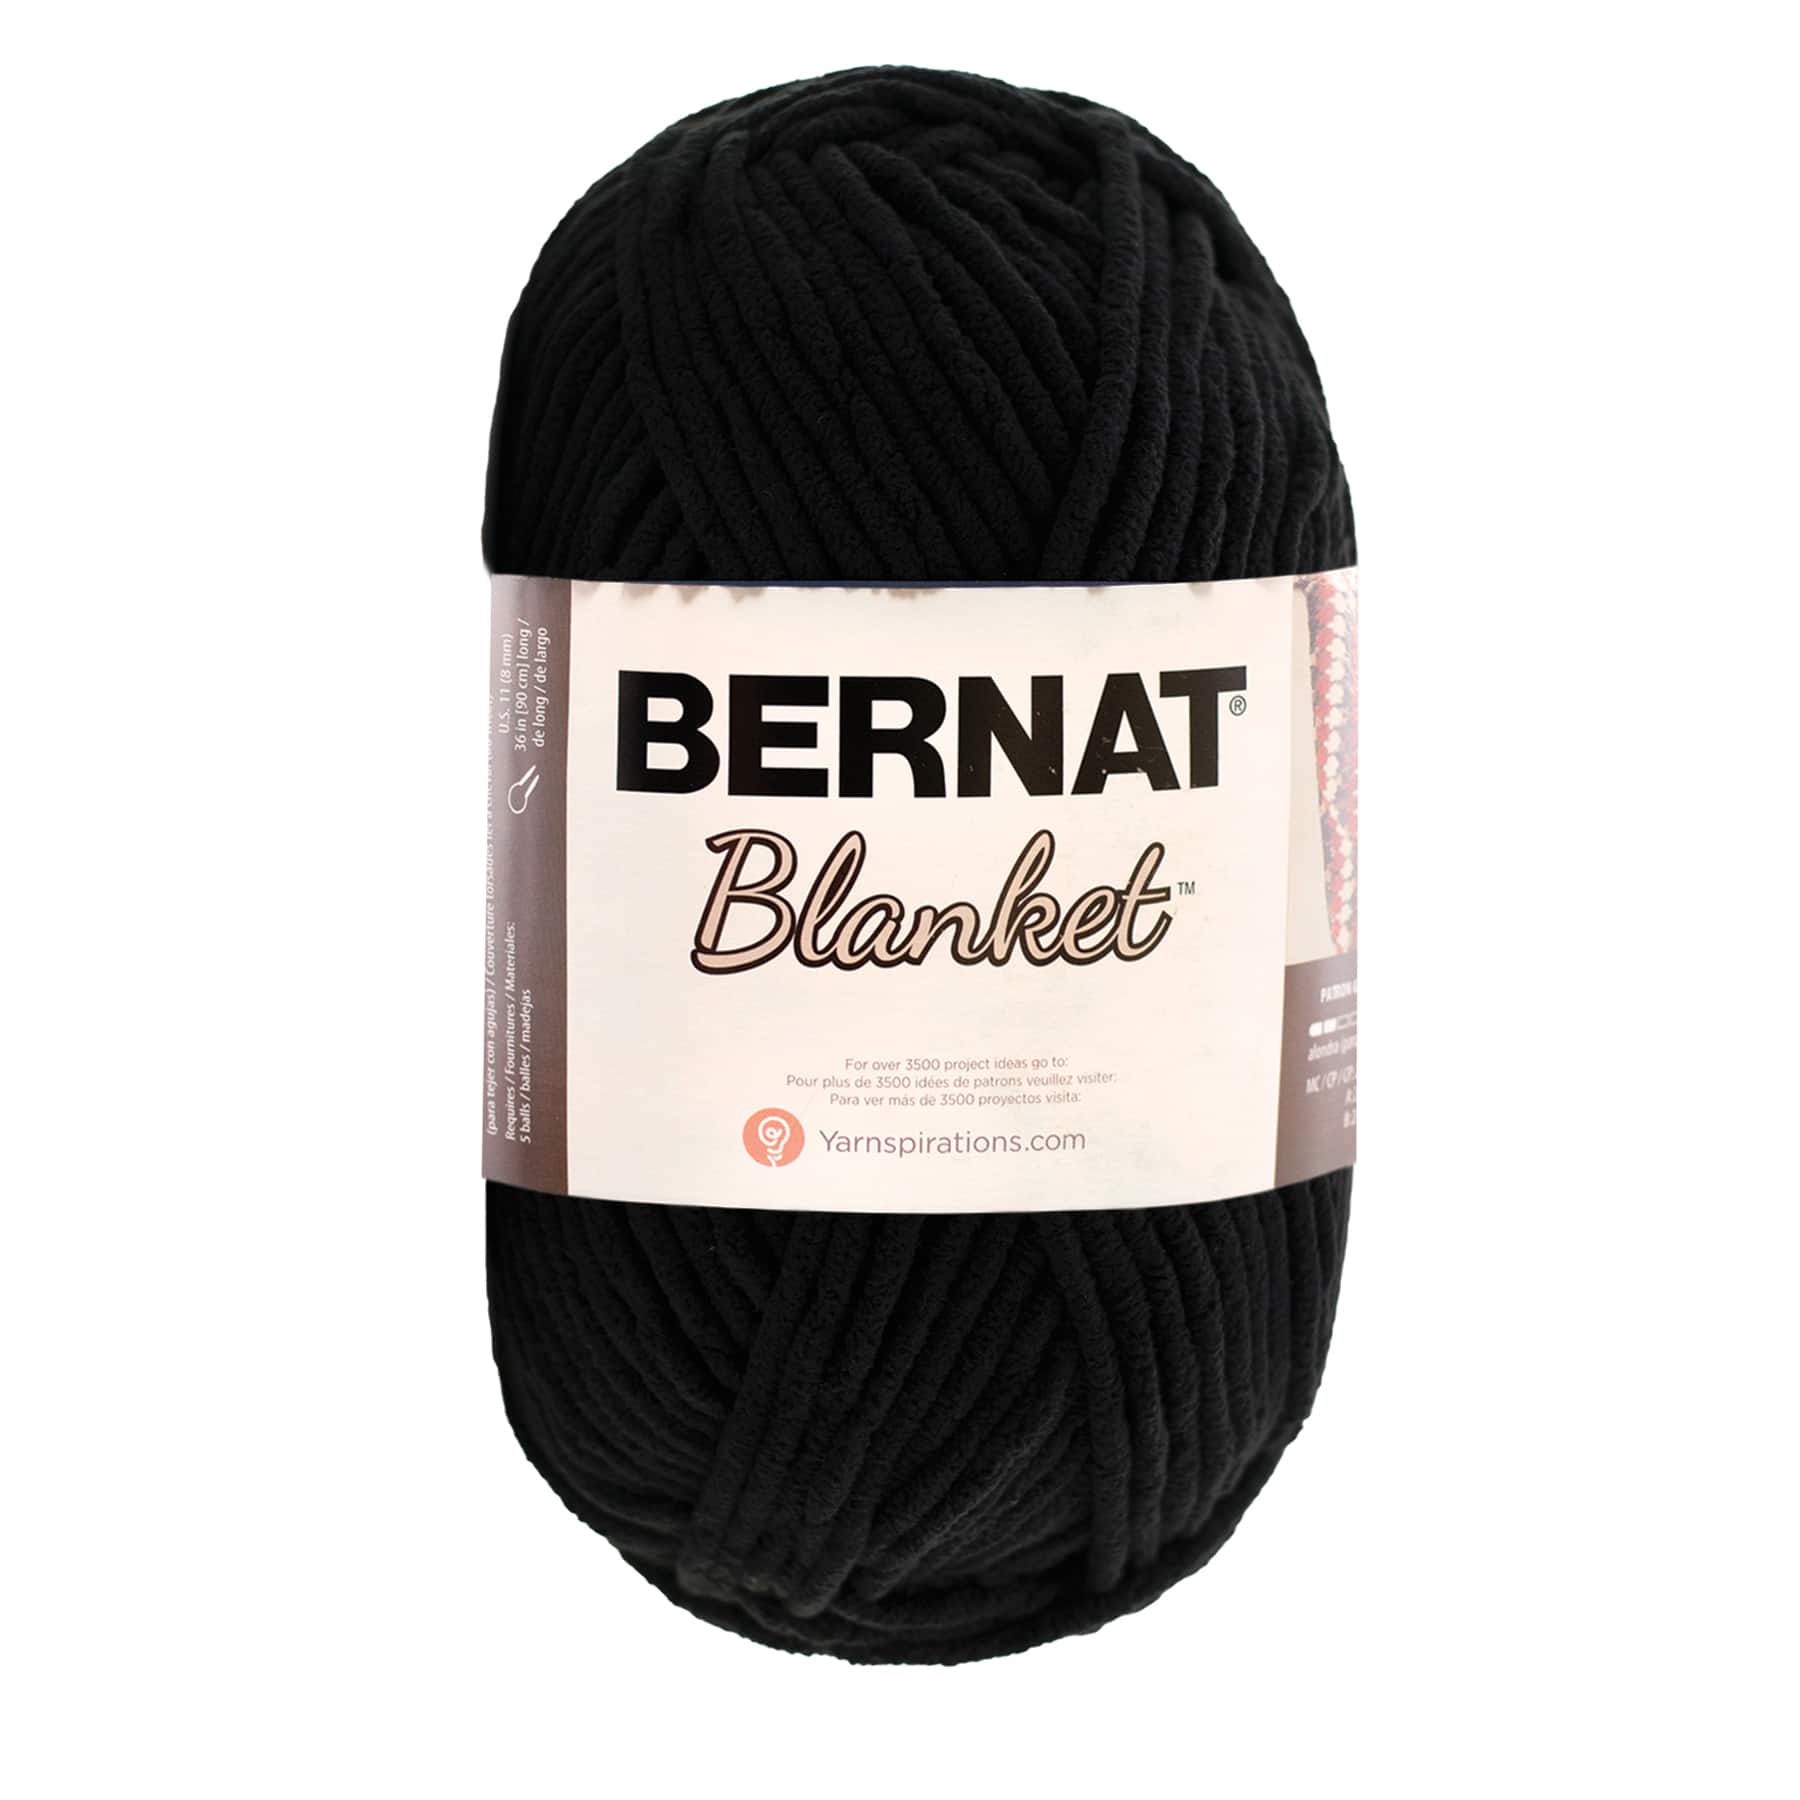 Bernat Blanket Extra Yarn-Speckled Moonrise, 1 count - Fry's Food Stores